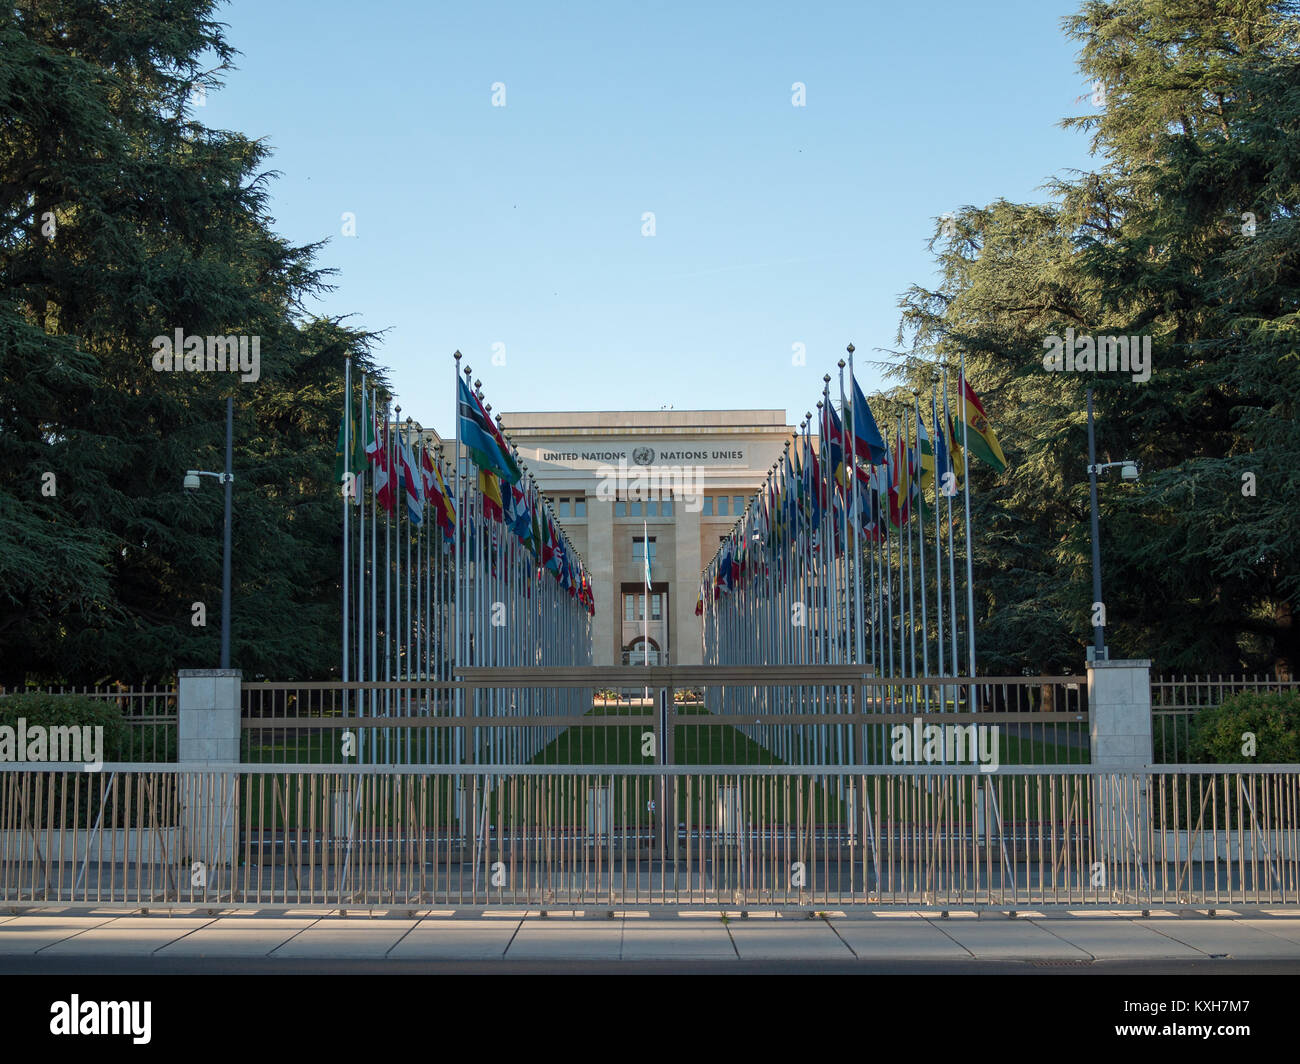 The United Nations, Geneva Stock Photo